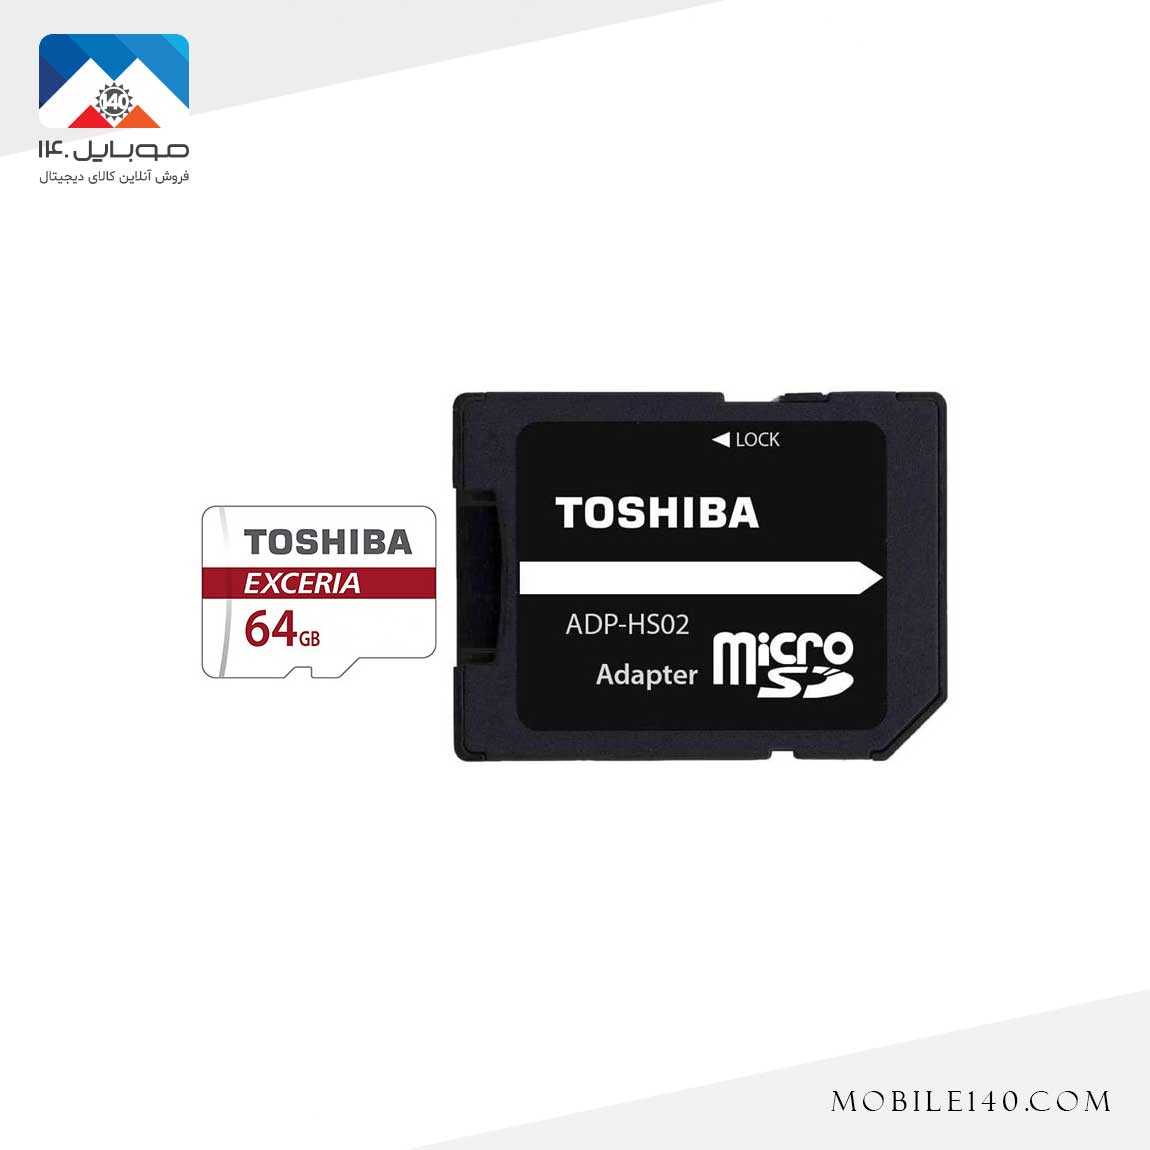 Toshiba M302-EA microSD 64GB 1